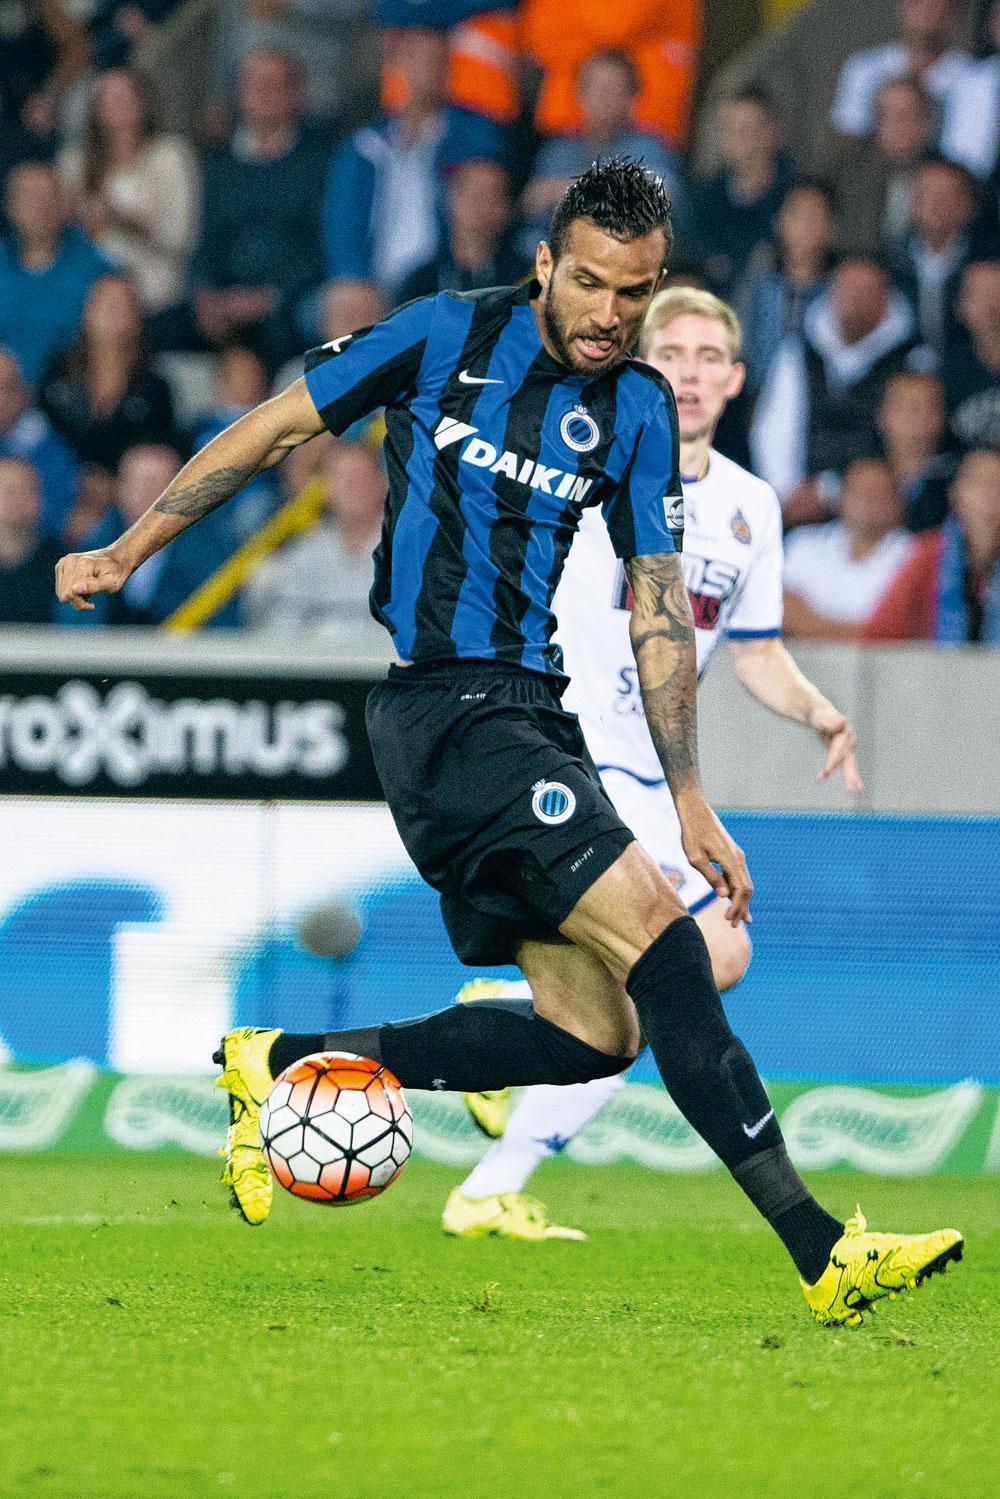 Leandro Pereira vertrok na één jaartje Club Brugge al terug naar Brazilië.